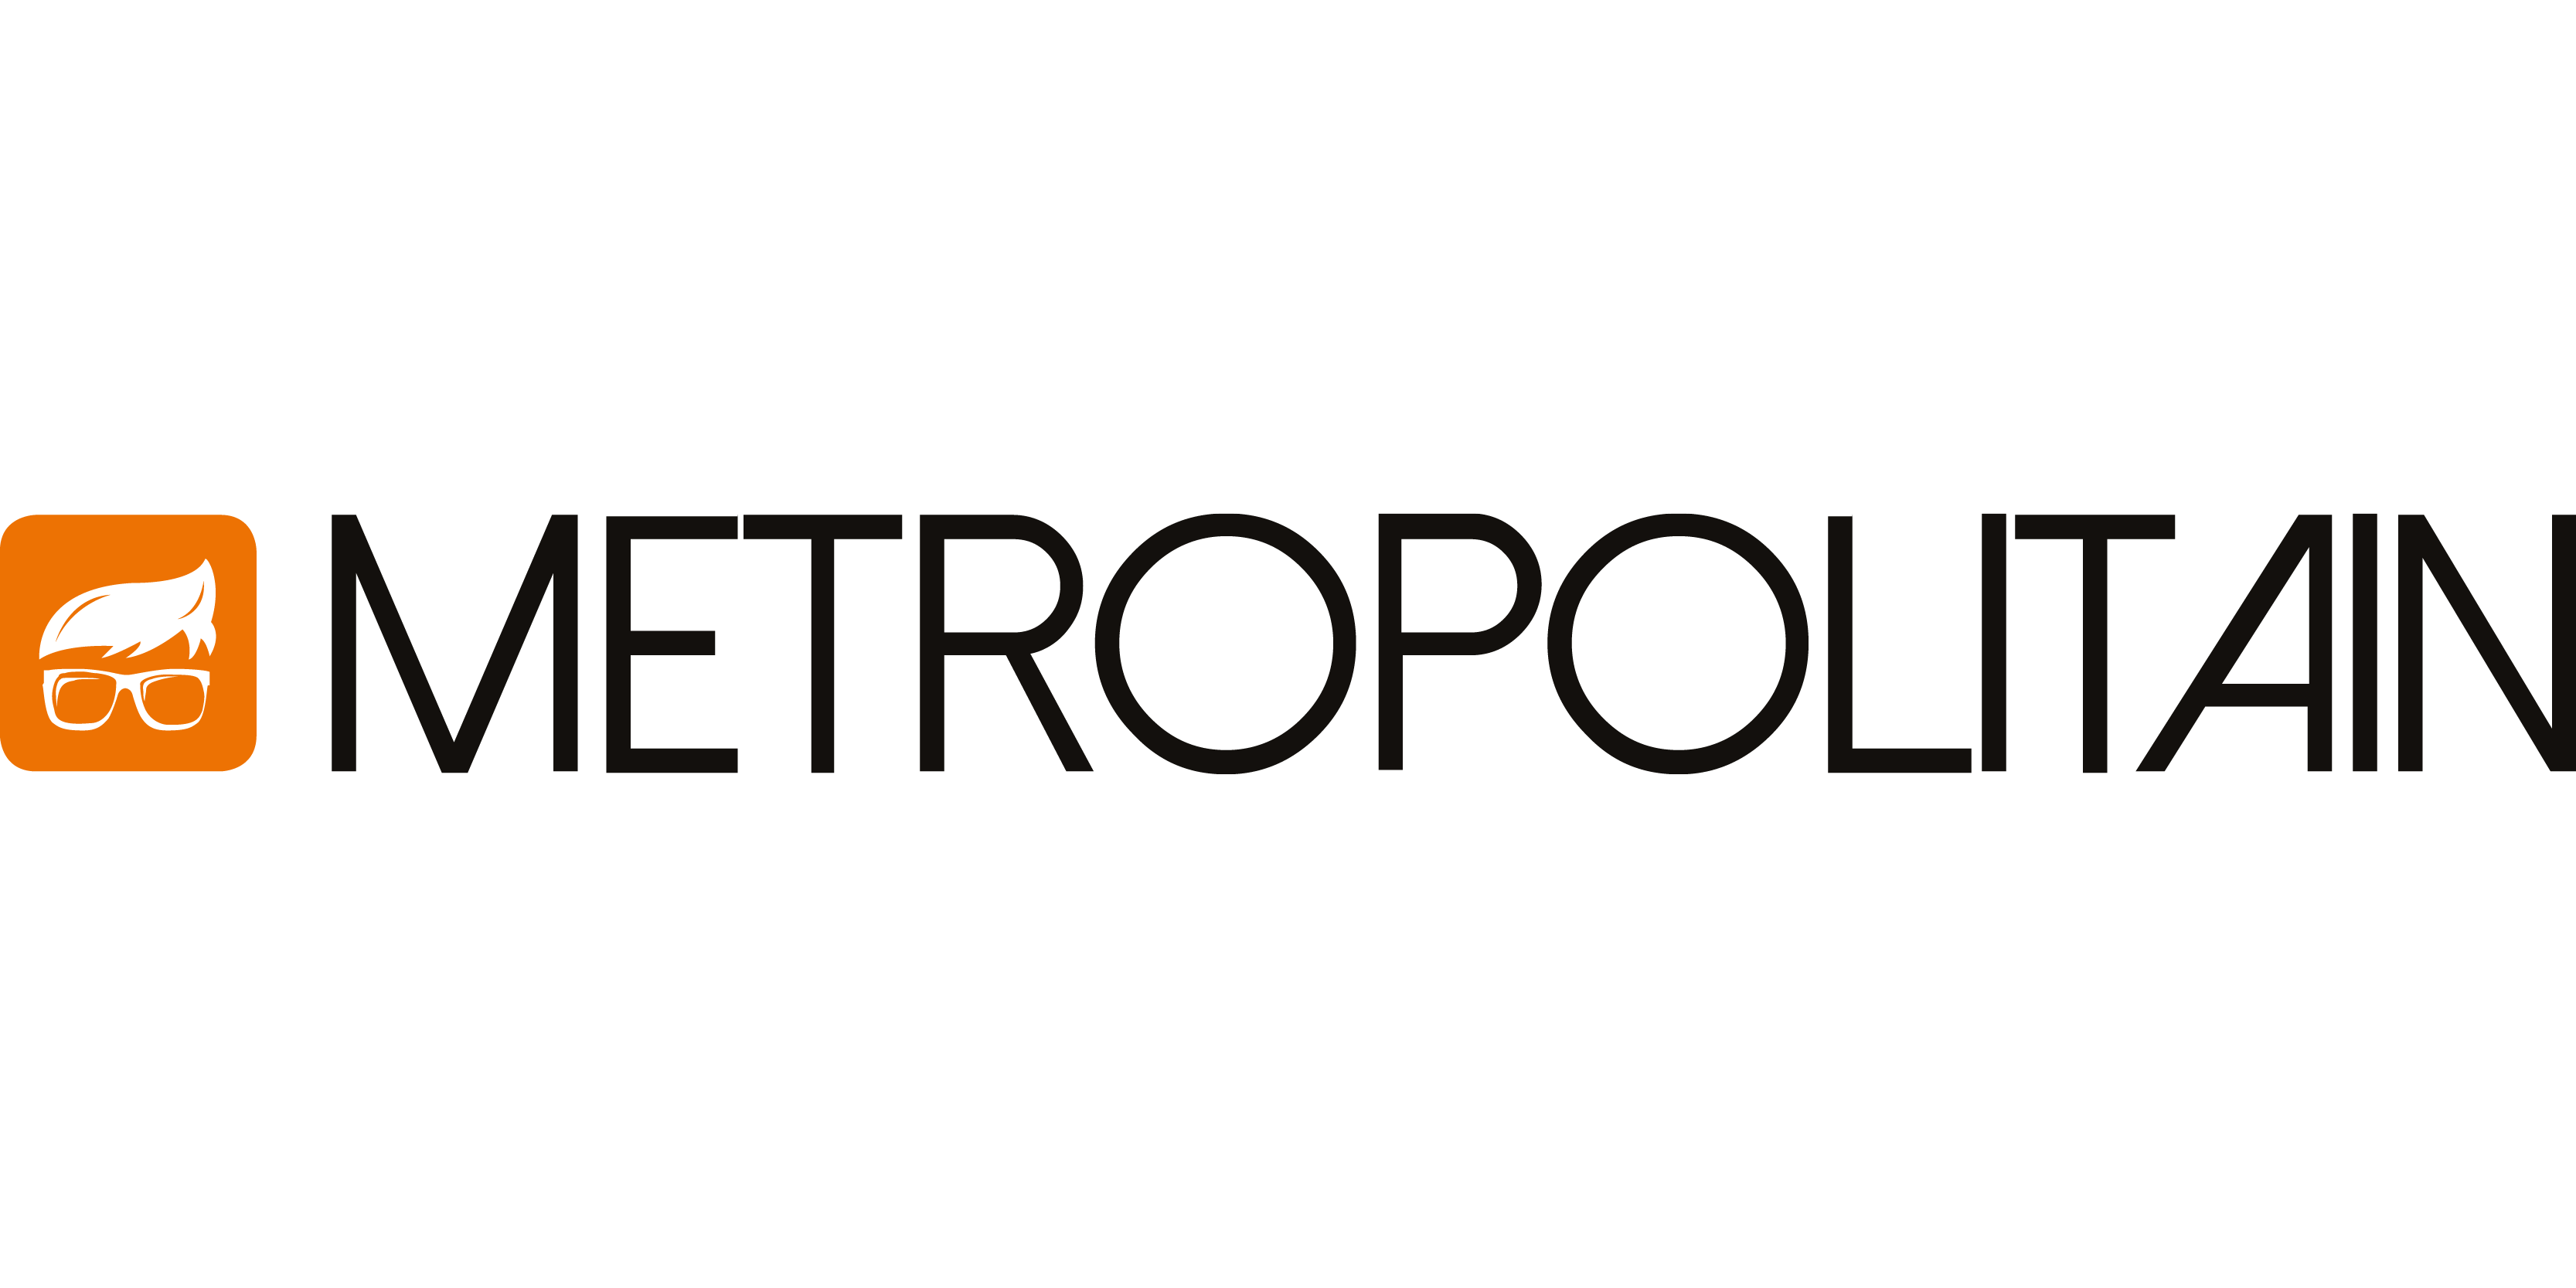 005_Metropolitain (logo)